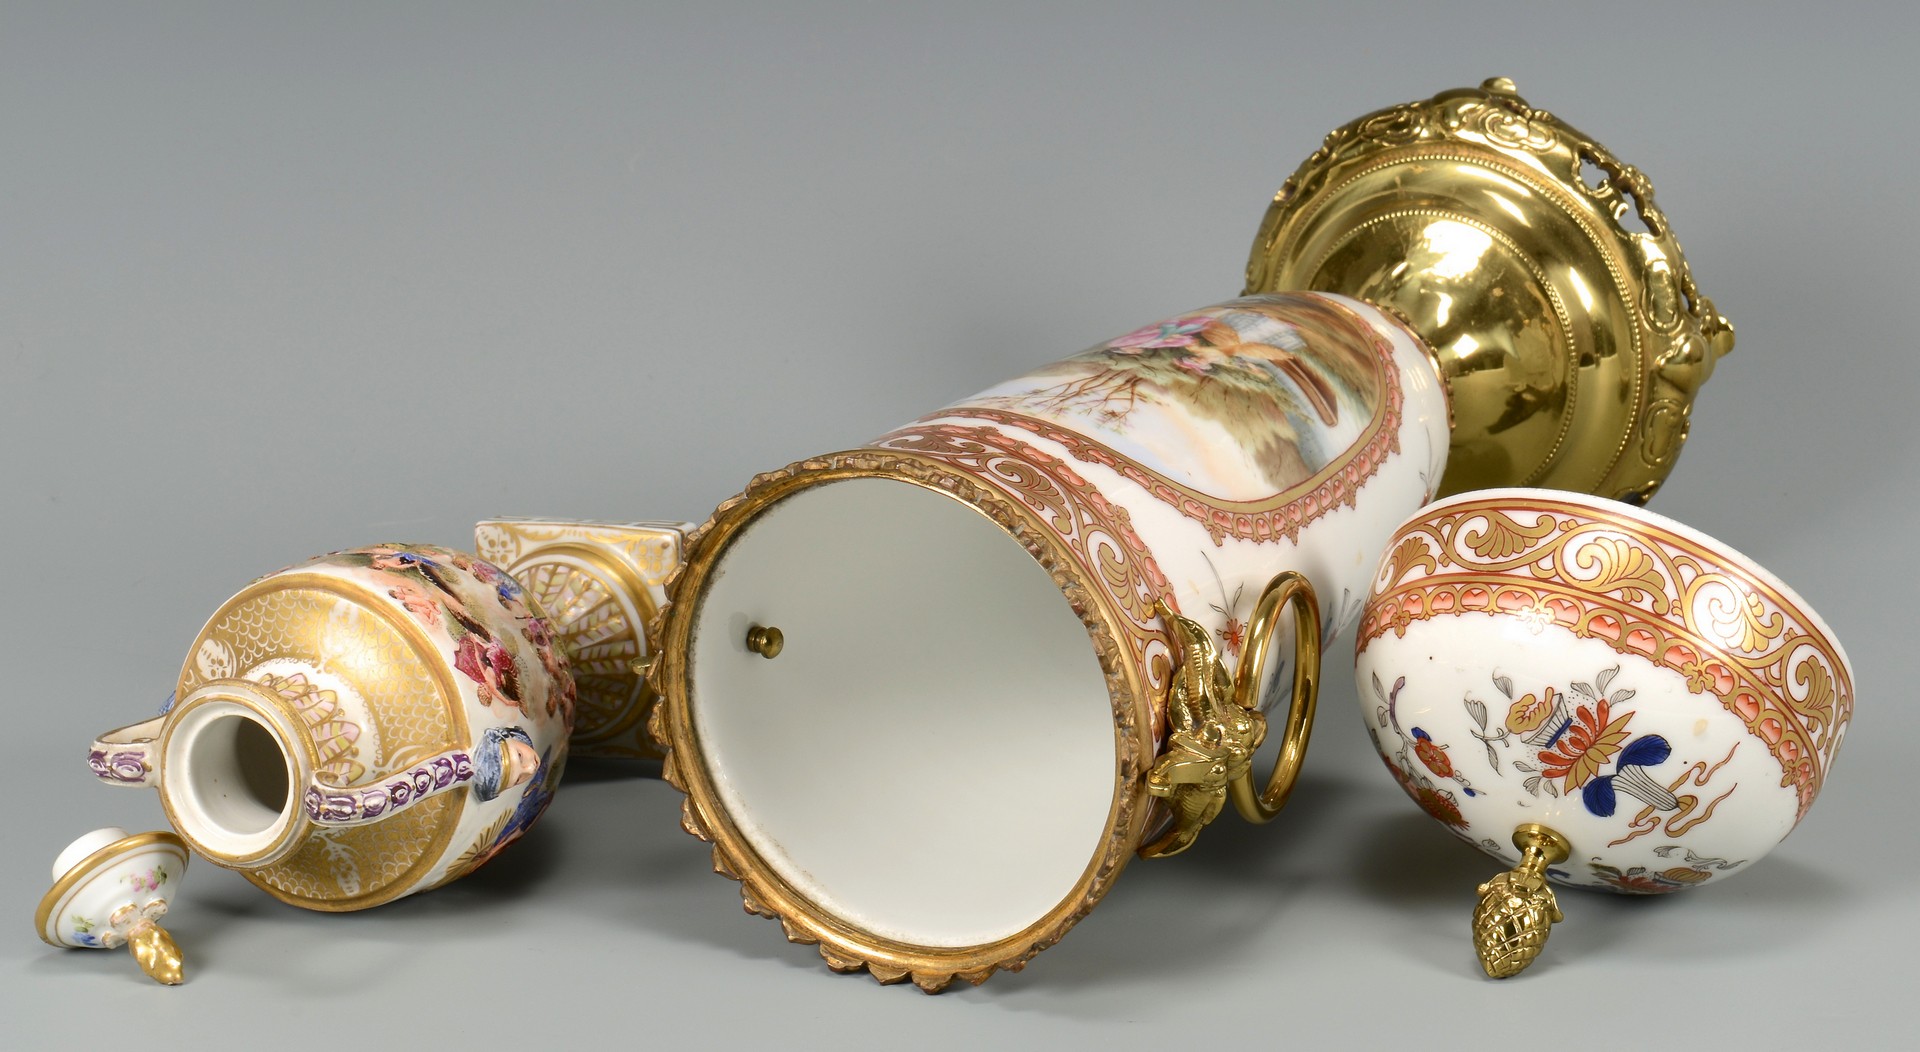 Lot 612: Two European Porcelain Urns